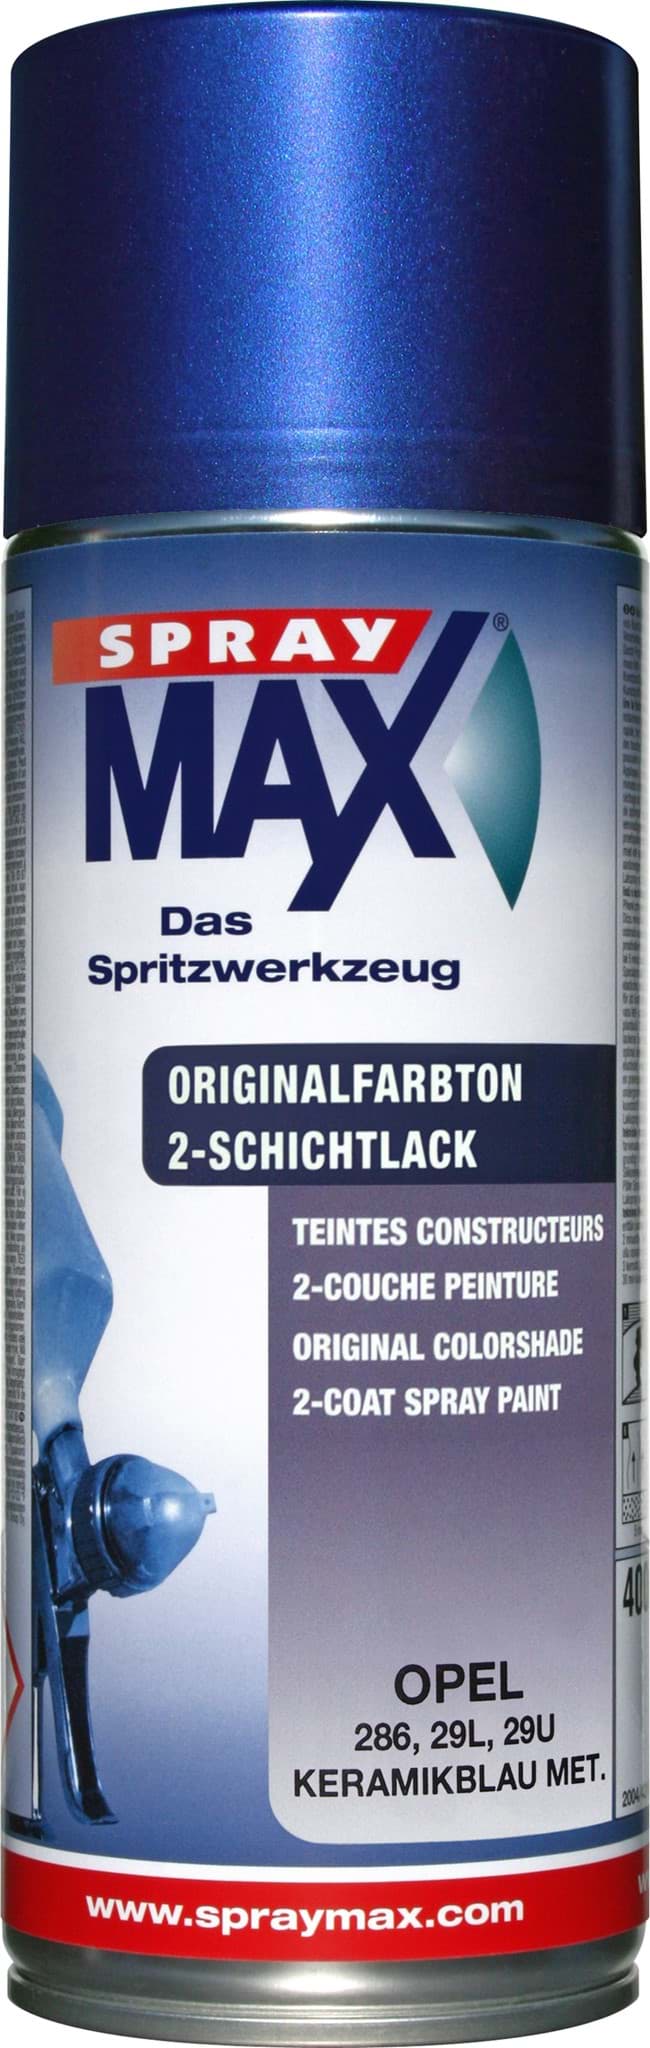 SprayMax Originalfarbton für Opel 286 keramikblau met. resmi